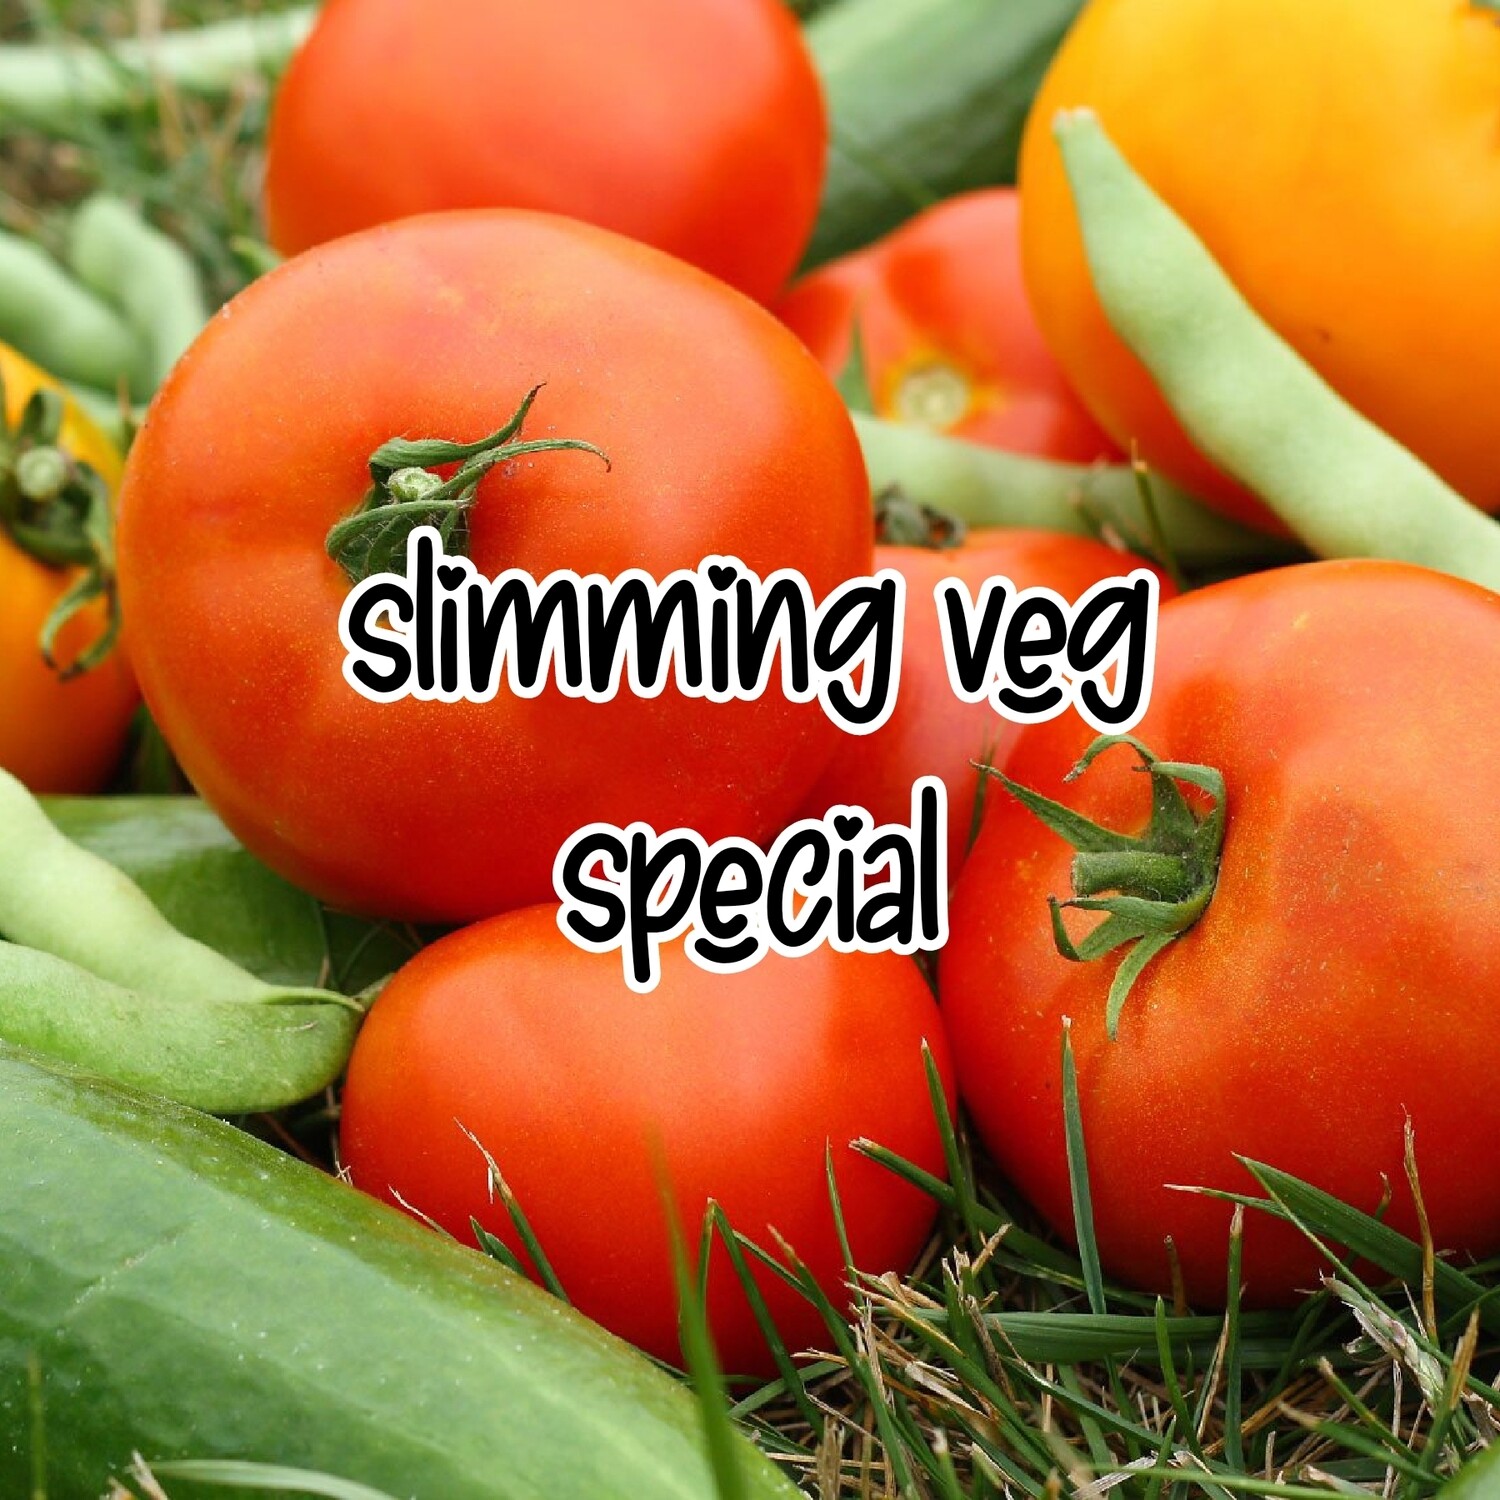 Slimming vegetable special